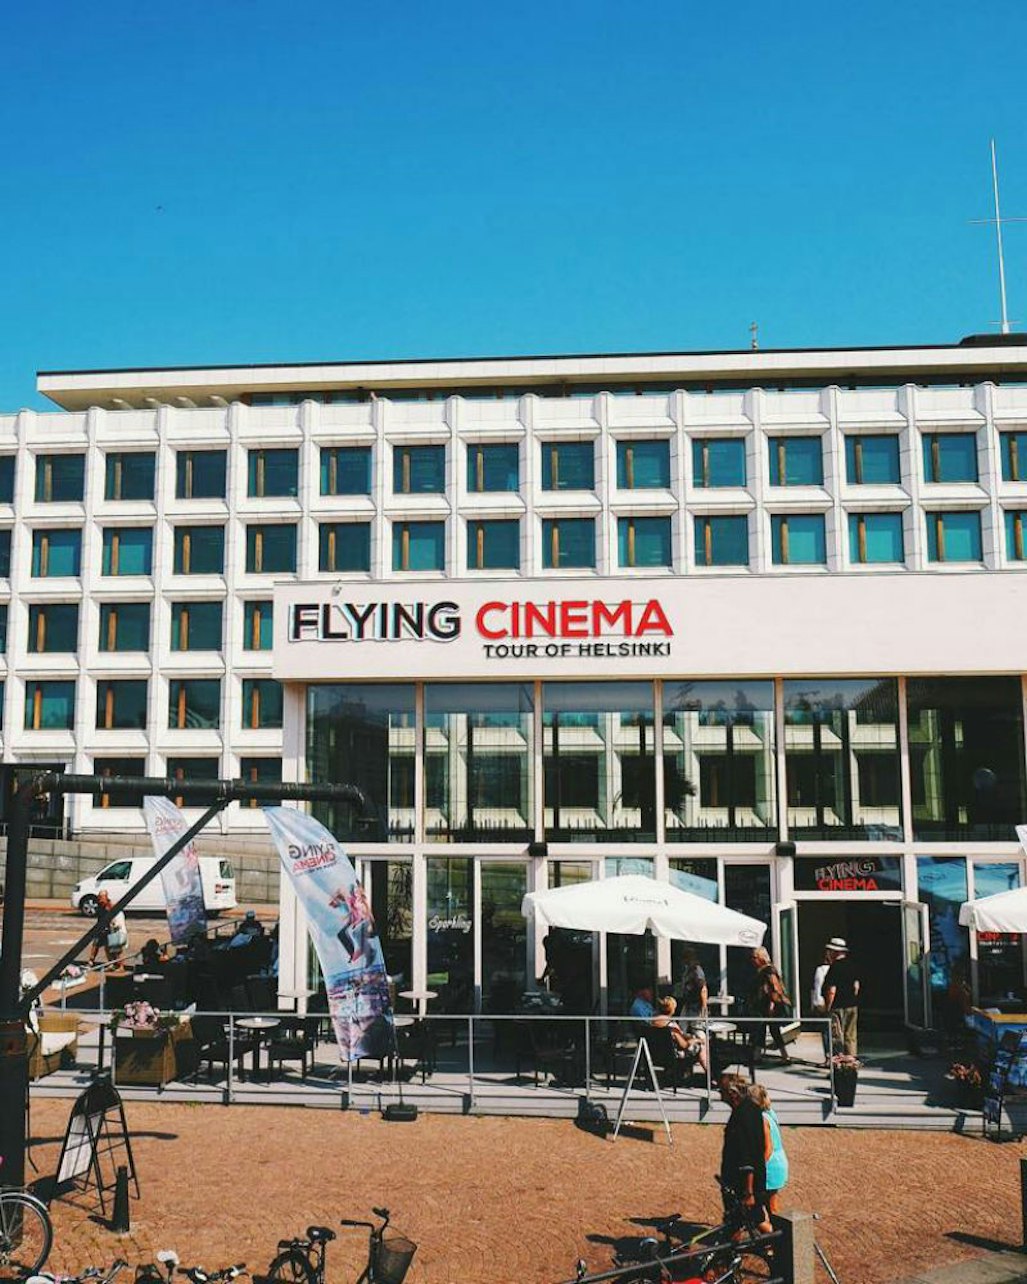 Flying Cinema Tour of Helsinki - Accommodations in Helsinki